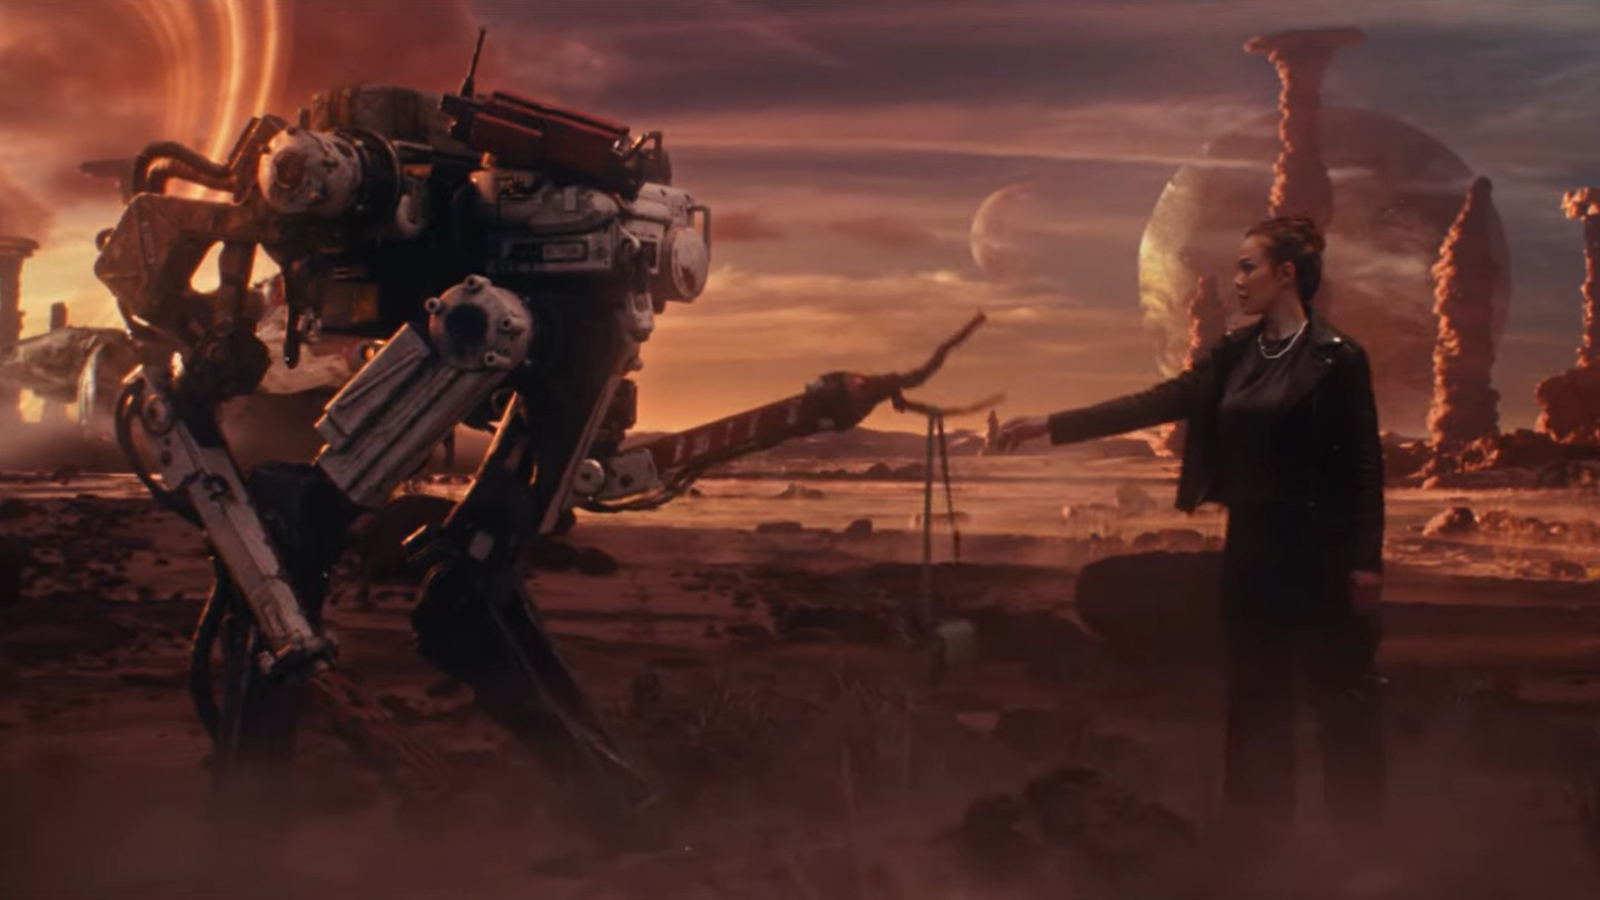 Microsoft releases a new trailer for Senua's Saga: Hellblade II - The Verge